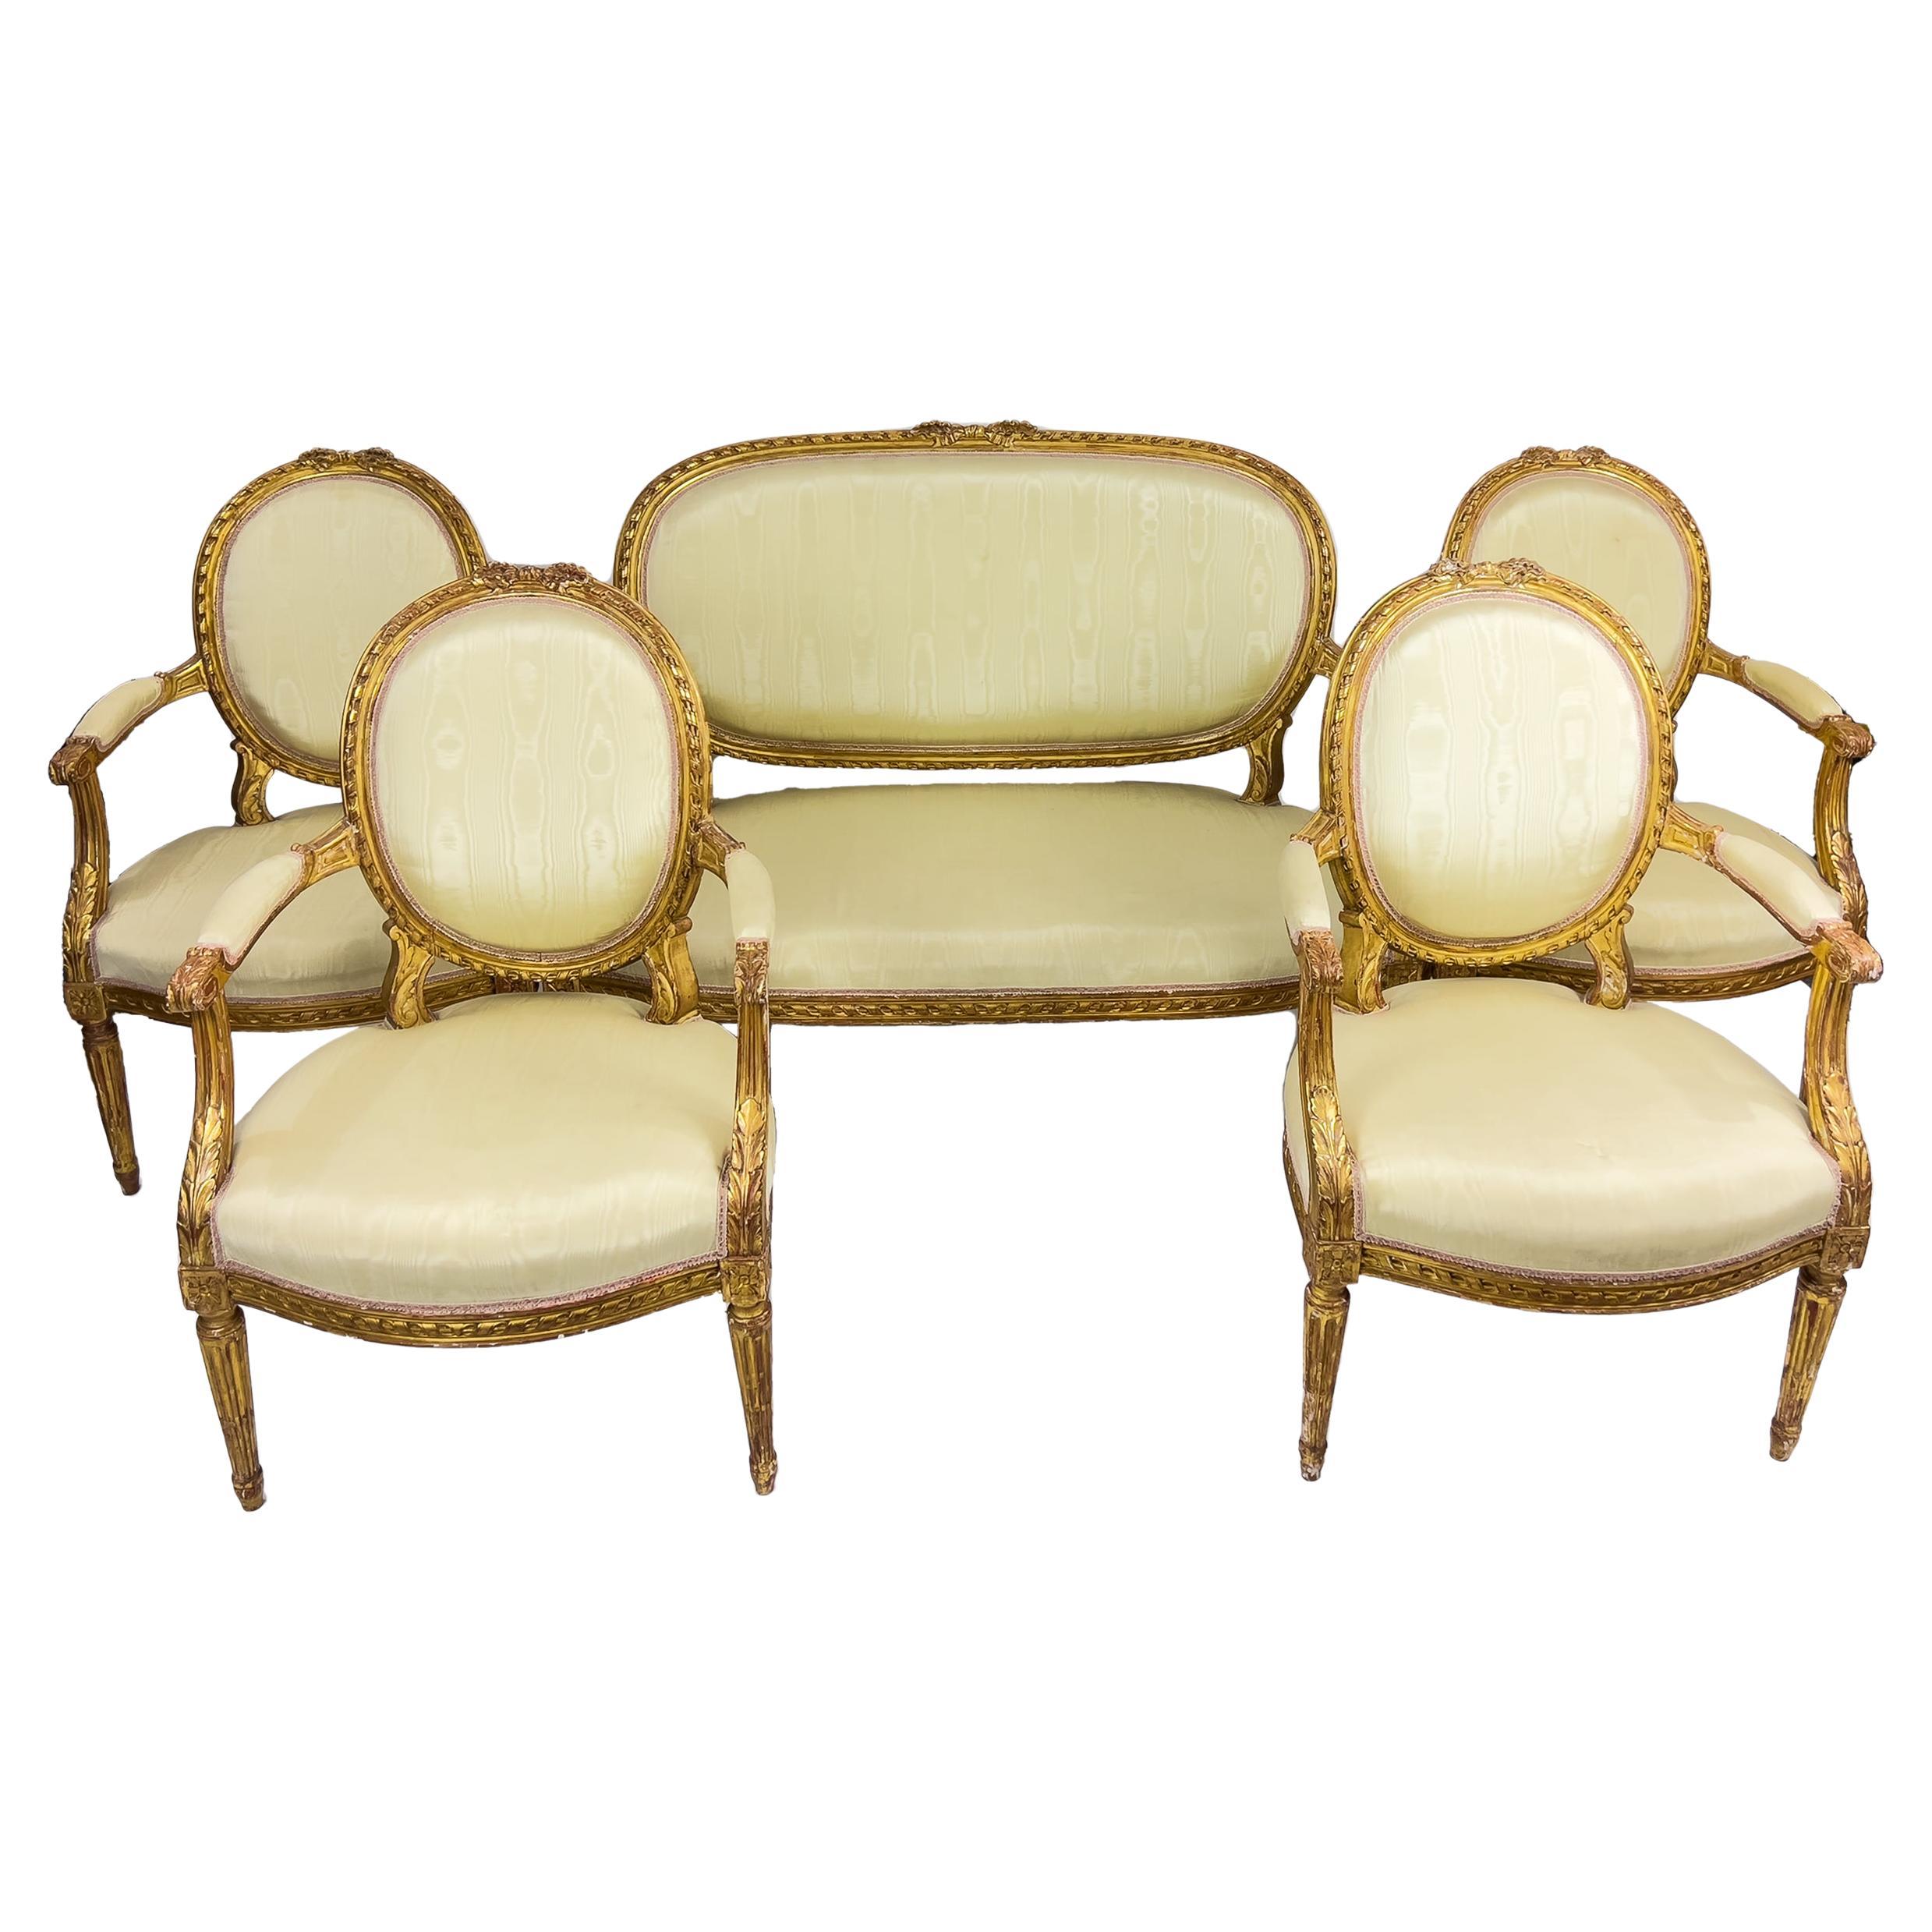 19th Century French Louis XVI Style Gilt-Wood Five-Piece Salon Suite For Sale